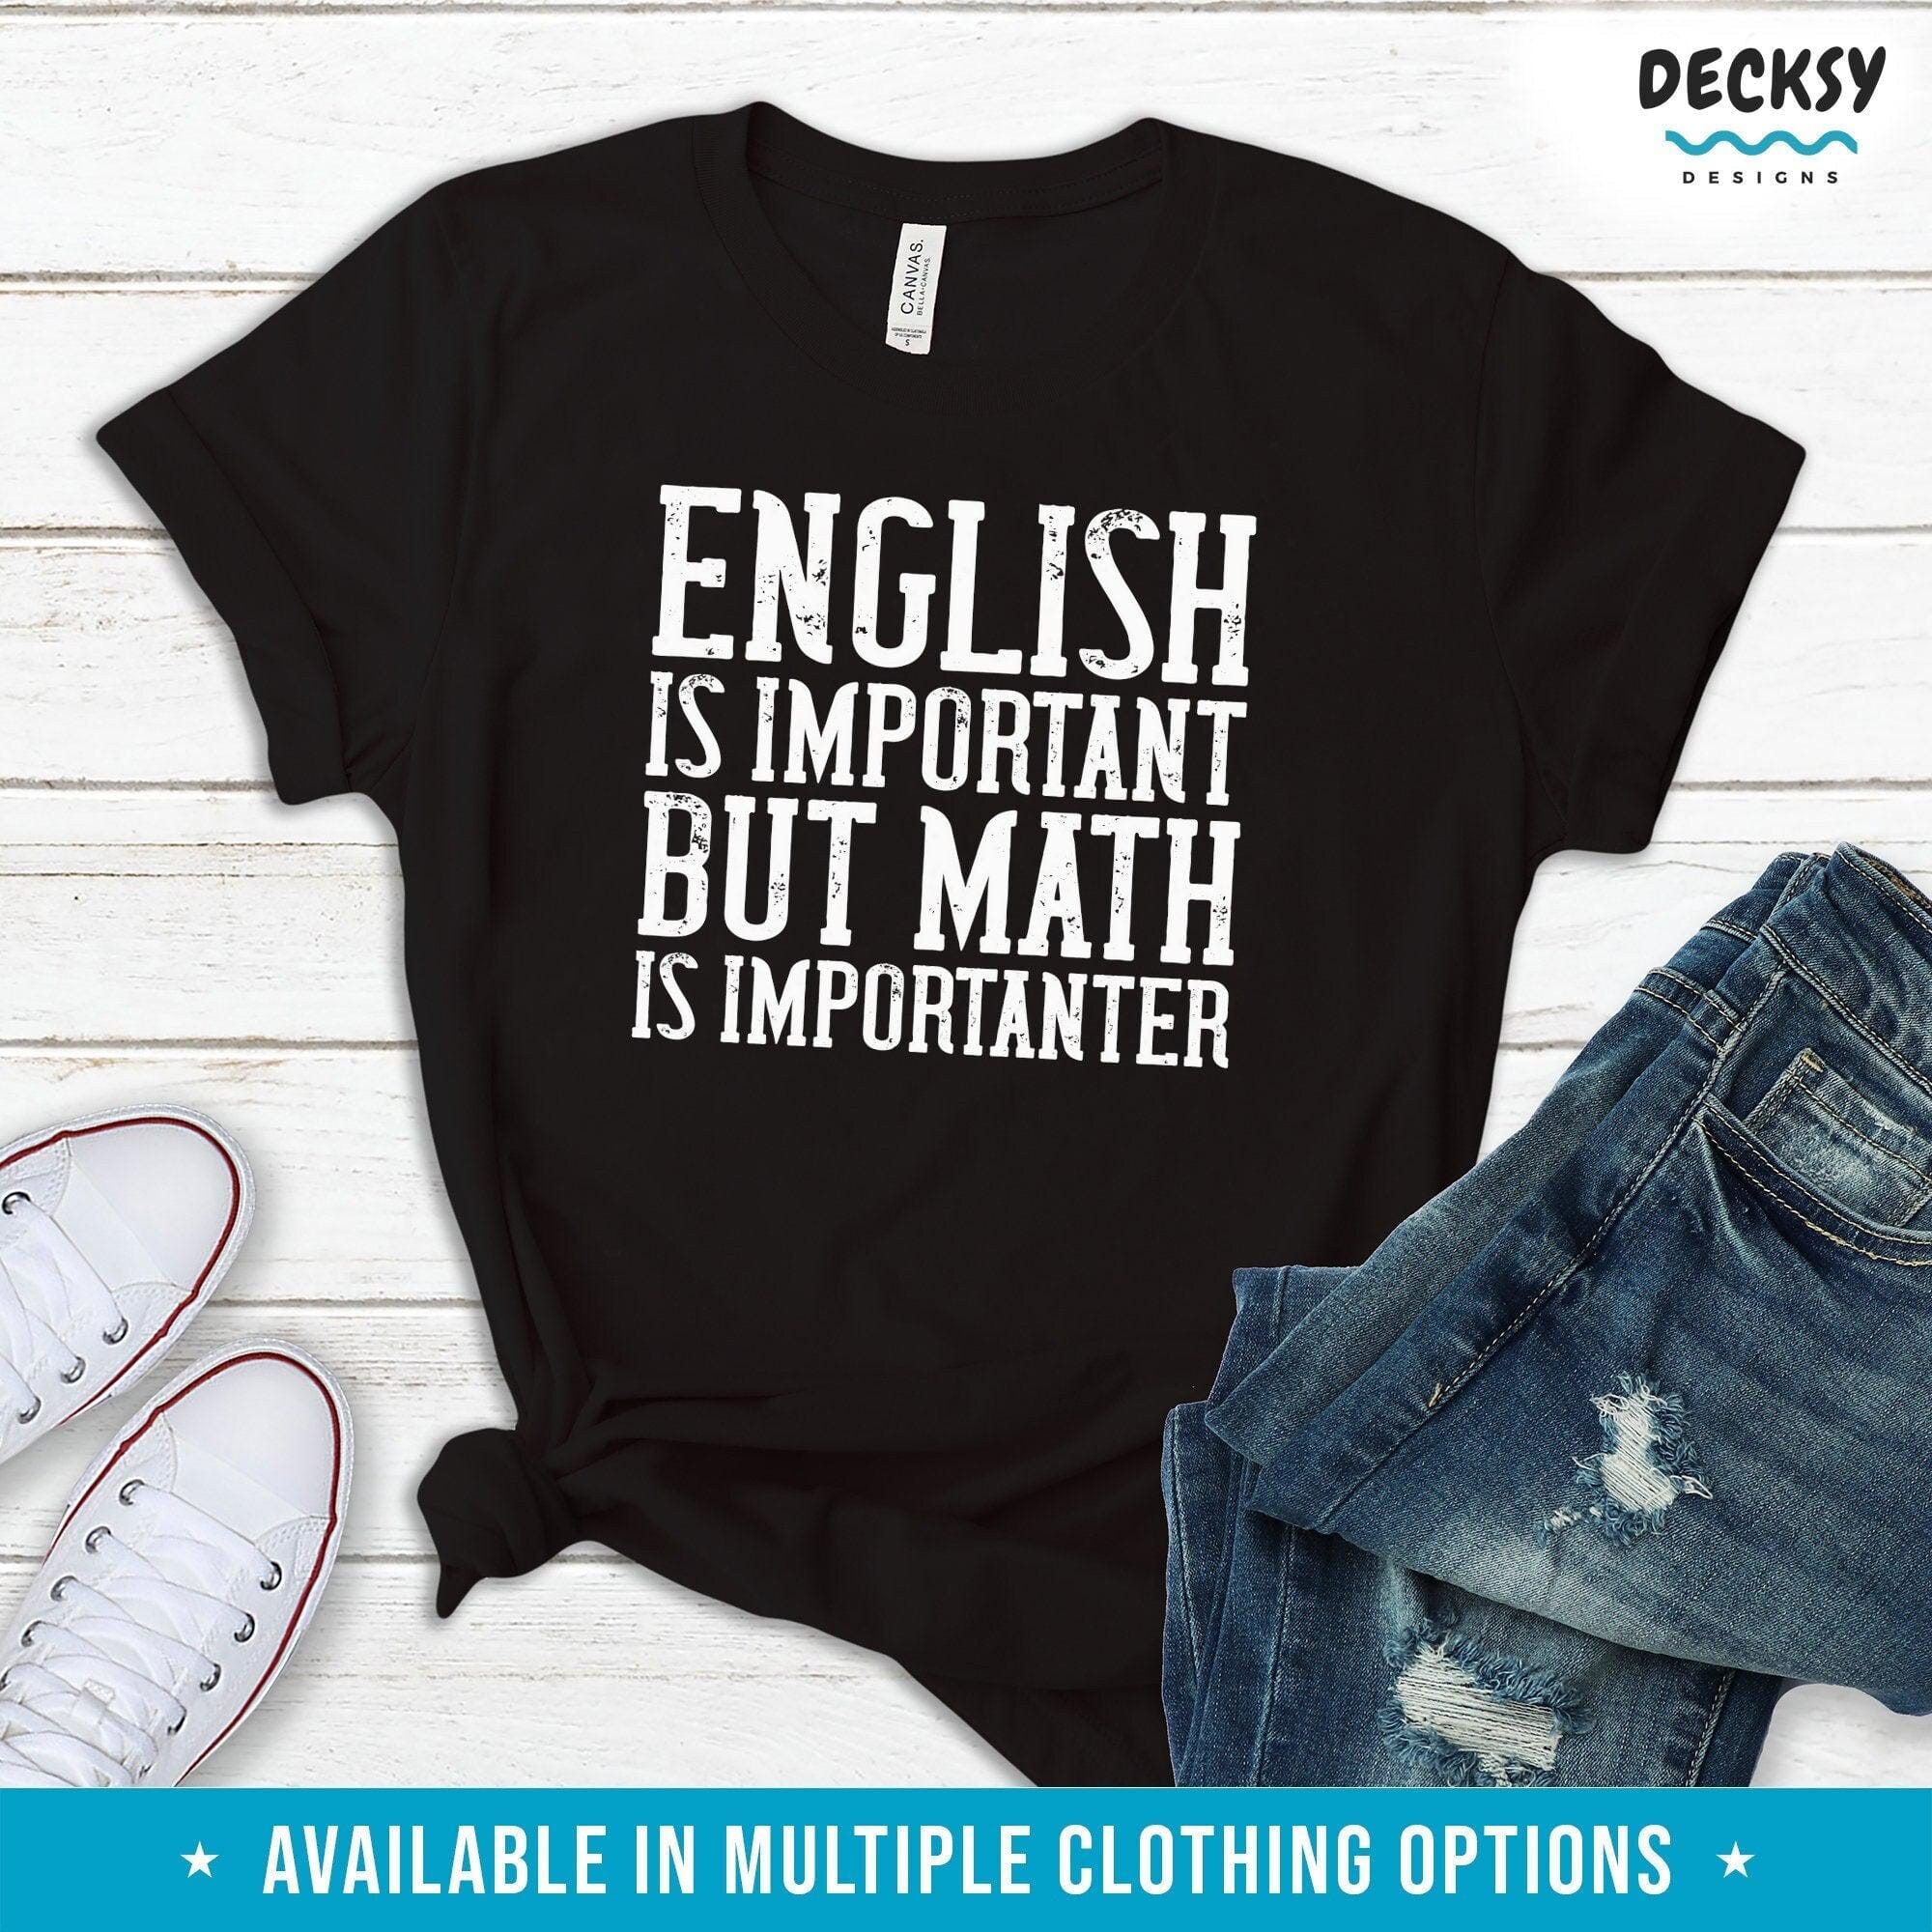 English Tshirt, Teacher Appreciation Gift-Clothing:Gender-Neutral Adult Clothing:Tops & Tees:T-shirts:Graphic Tees-DecksyDesigns